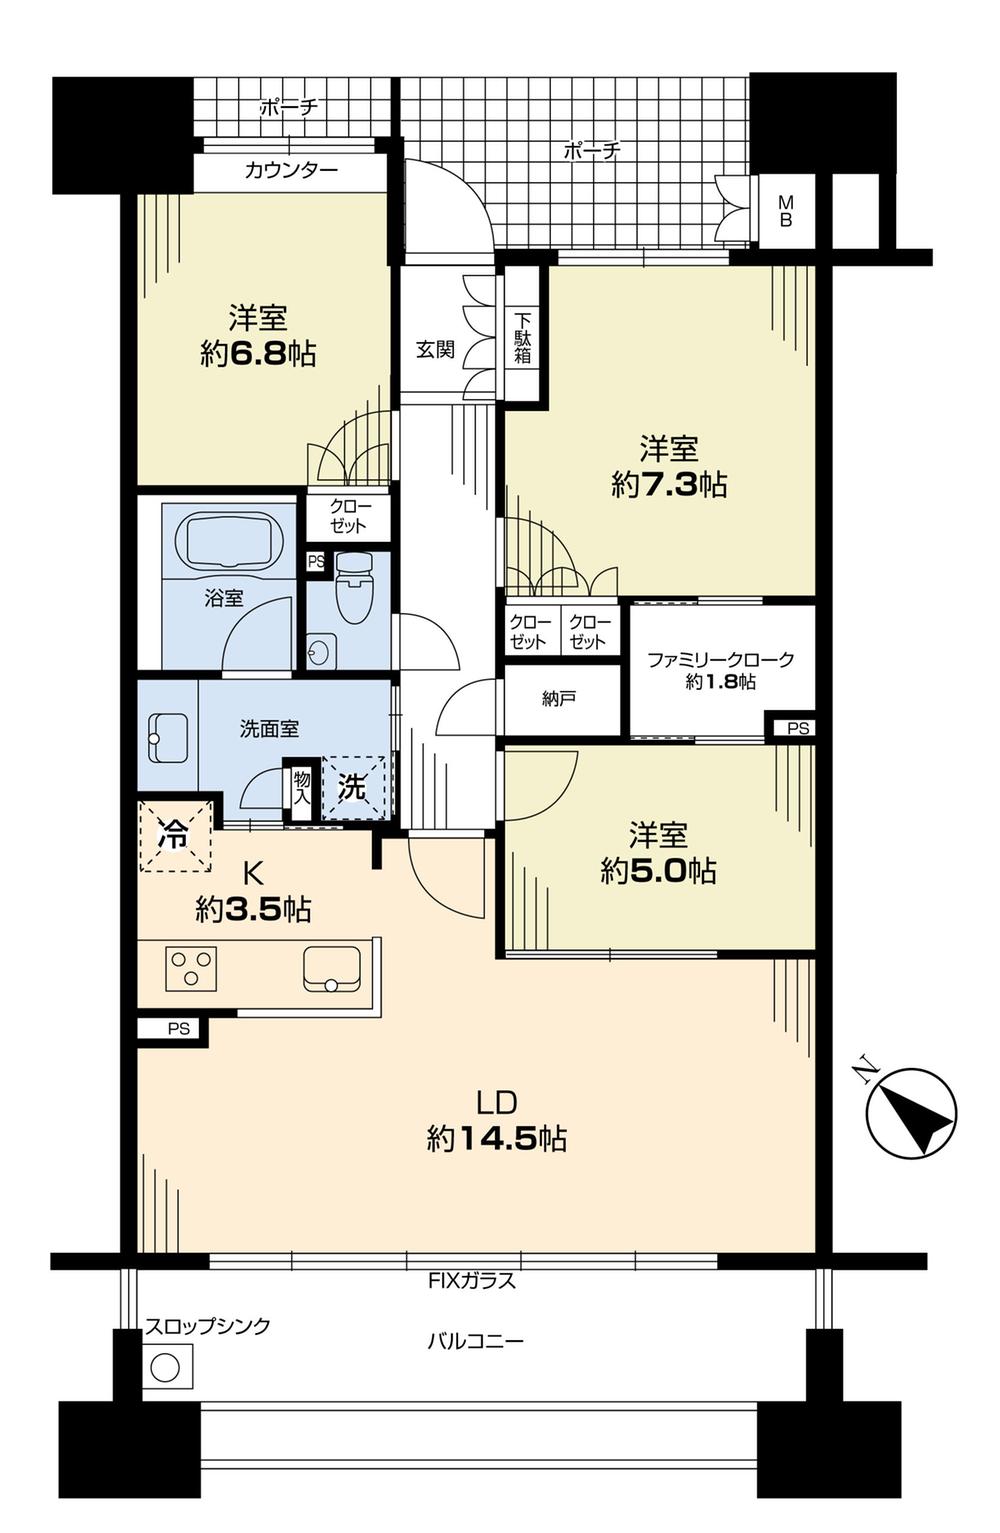 Floor plan. 3LDK, Price 71,800,000 yen, Occupied area 81.12 sq m , Balcony area 13.87 sq m